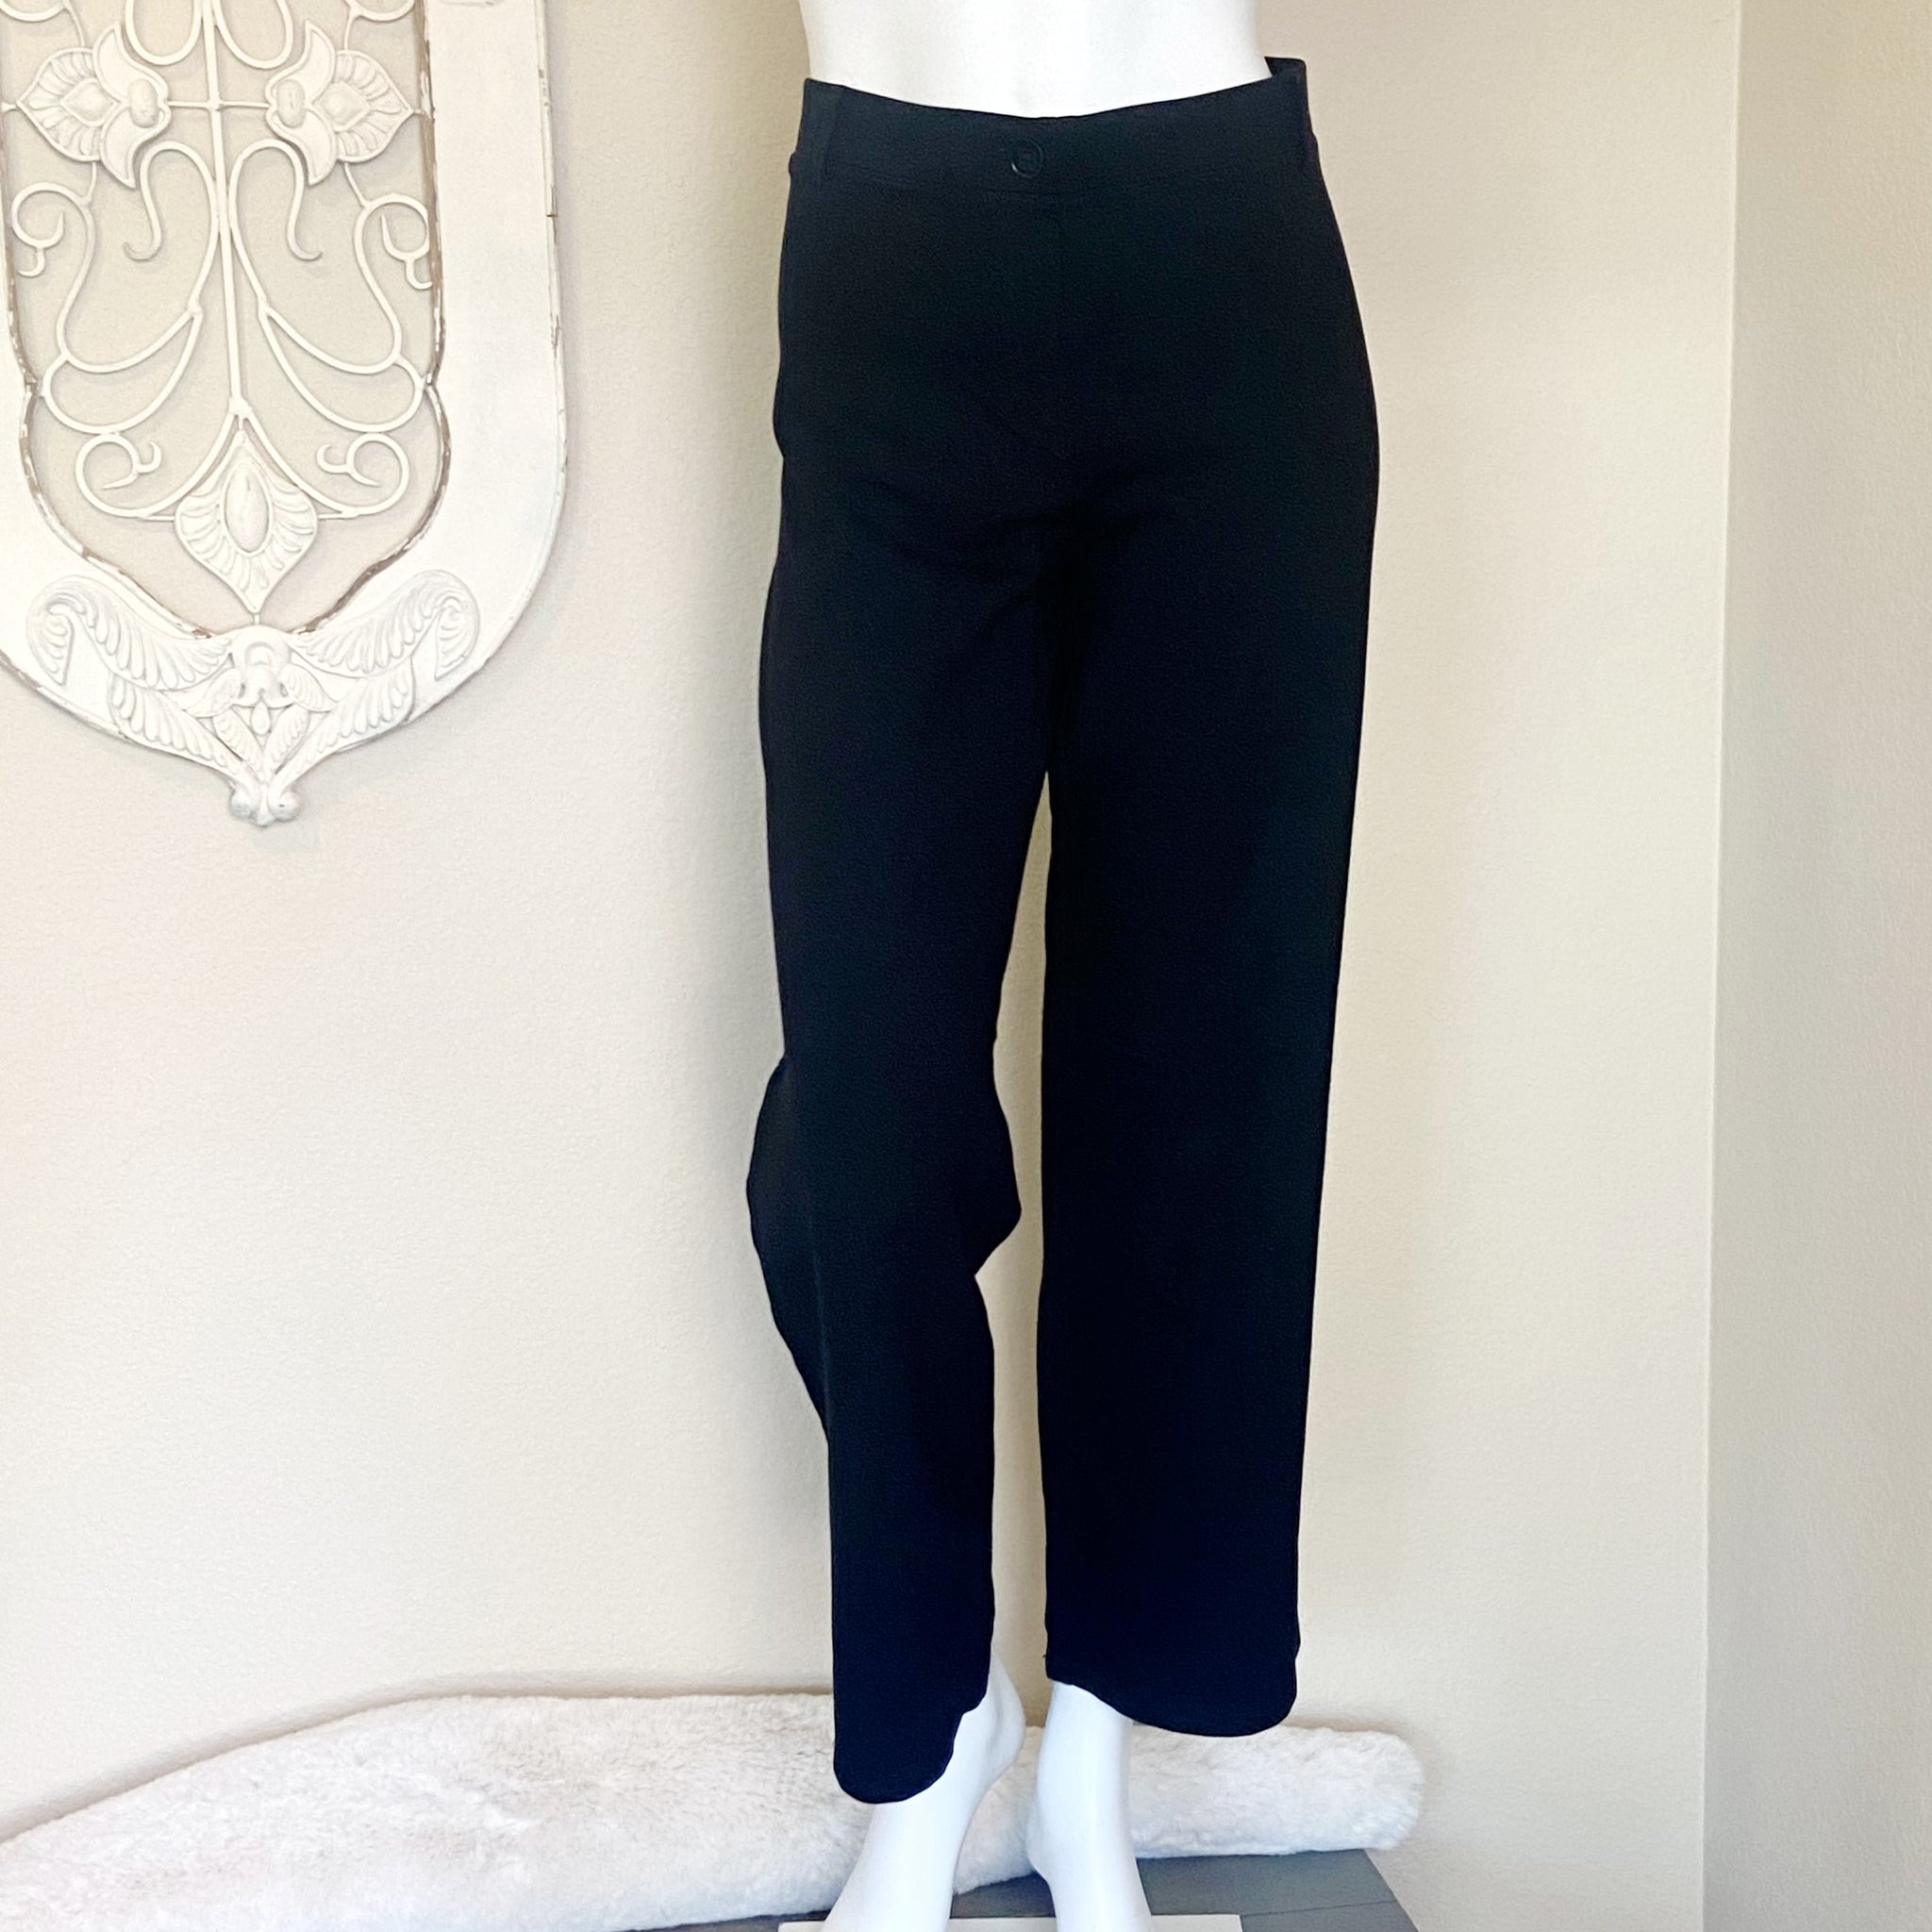 Betabrand, Womens Black Boot-Cut Classic Dress Pant Yoga Pants